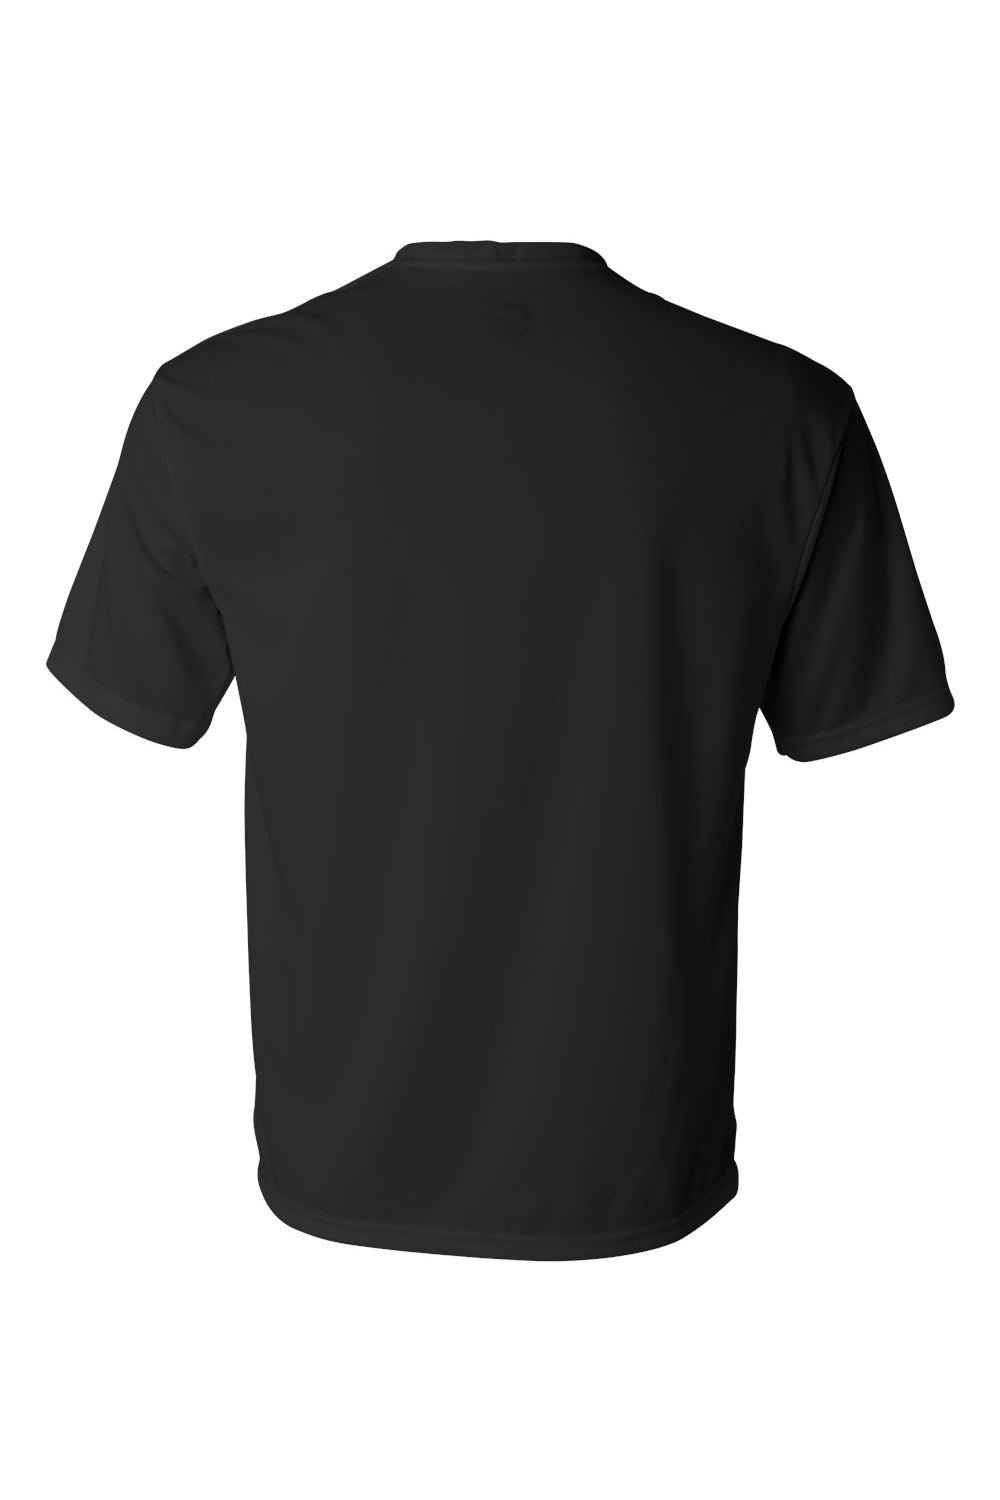 C2 Sport 5100 Mens Performance Moisture Wicking Short Sleeve Crewneck T-Shirt Black Flat Back